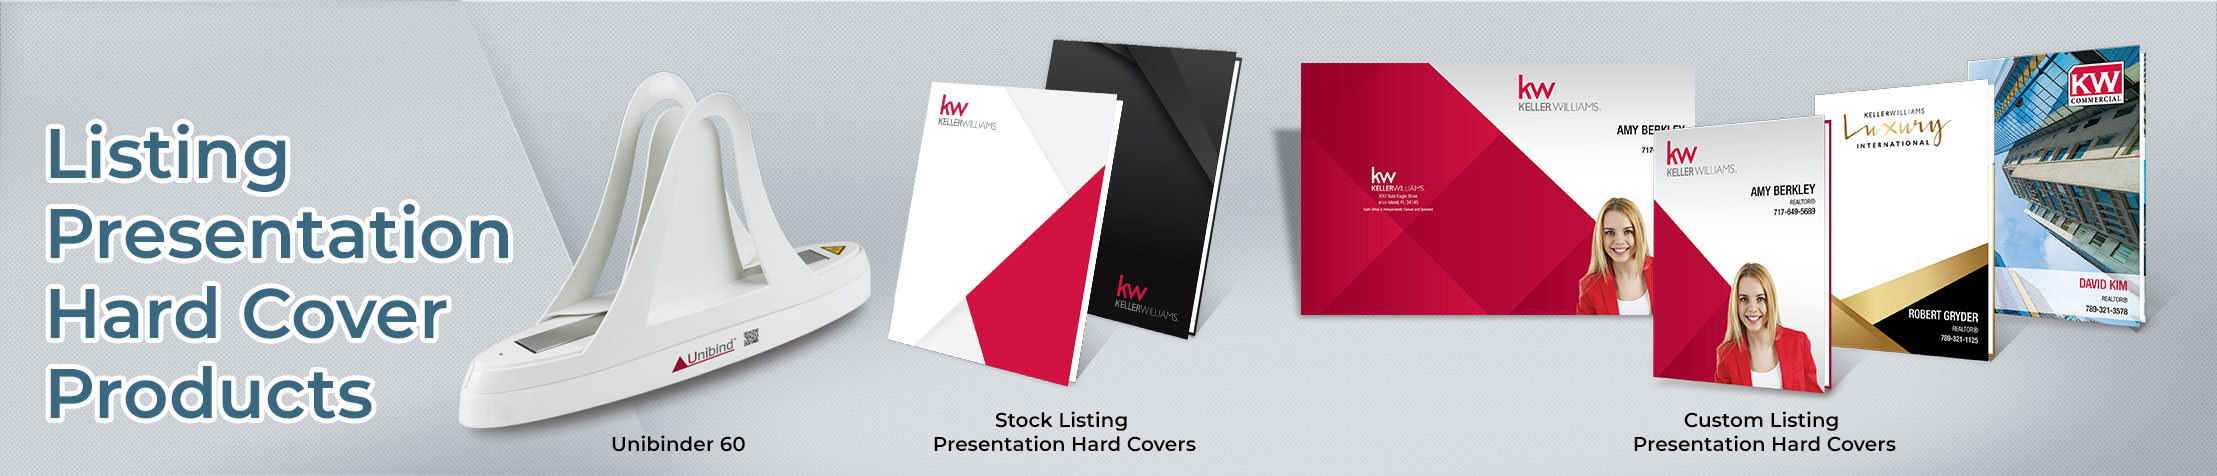 Keller Williams Real Estate Presentation covers - KW approved vendor covers | BestPrintBuy.com